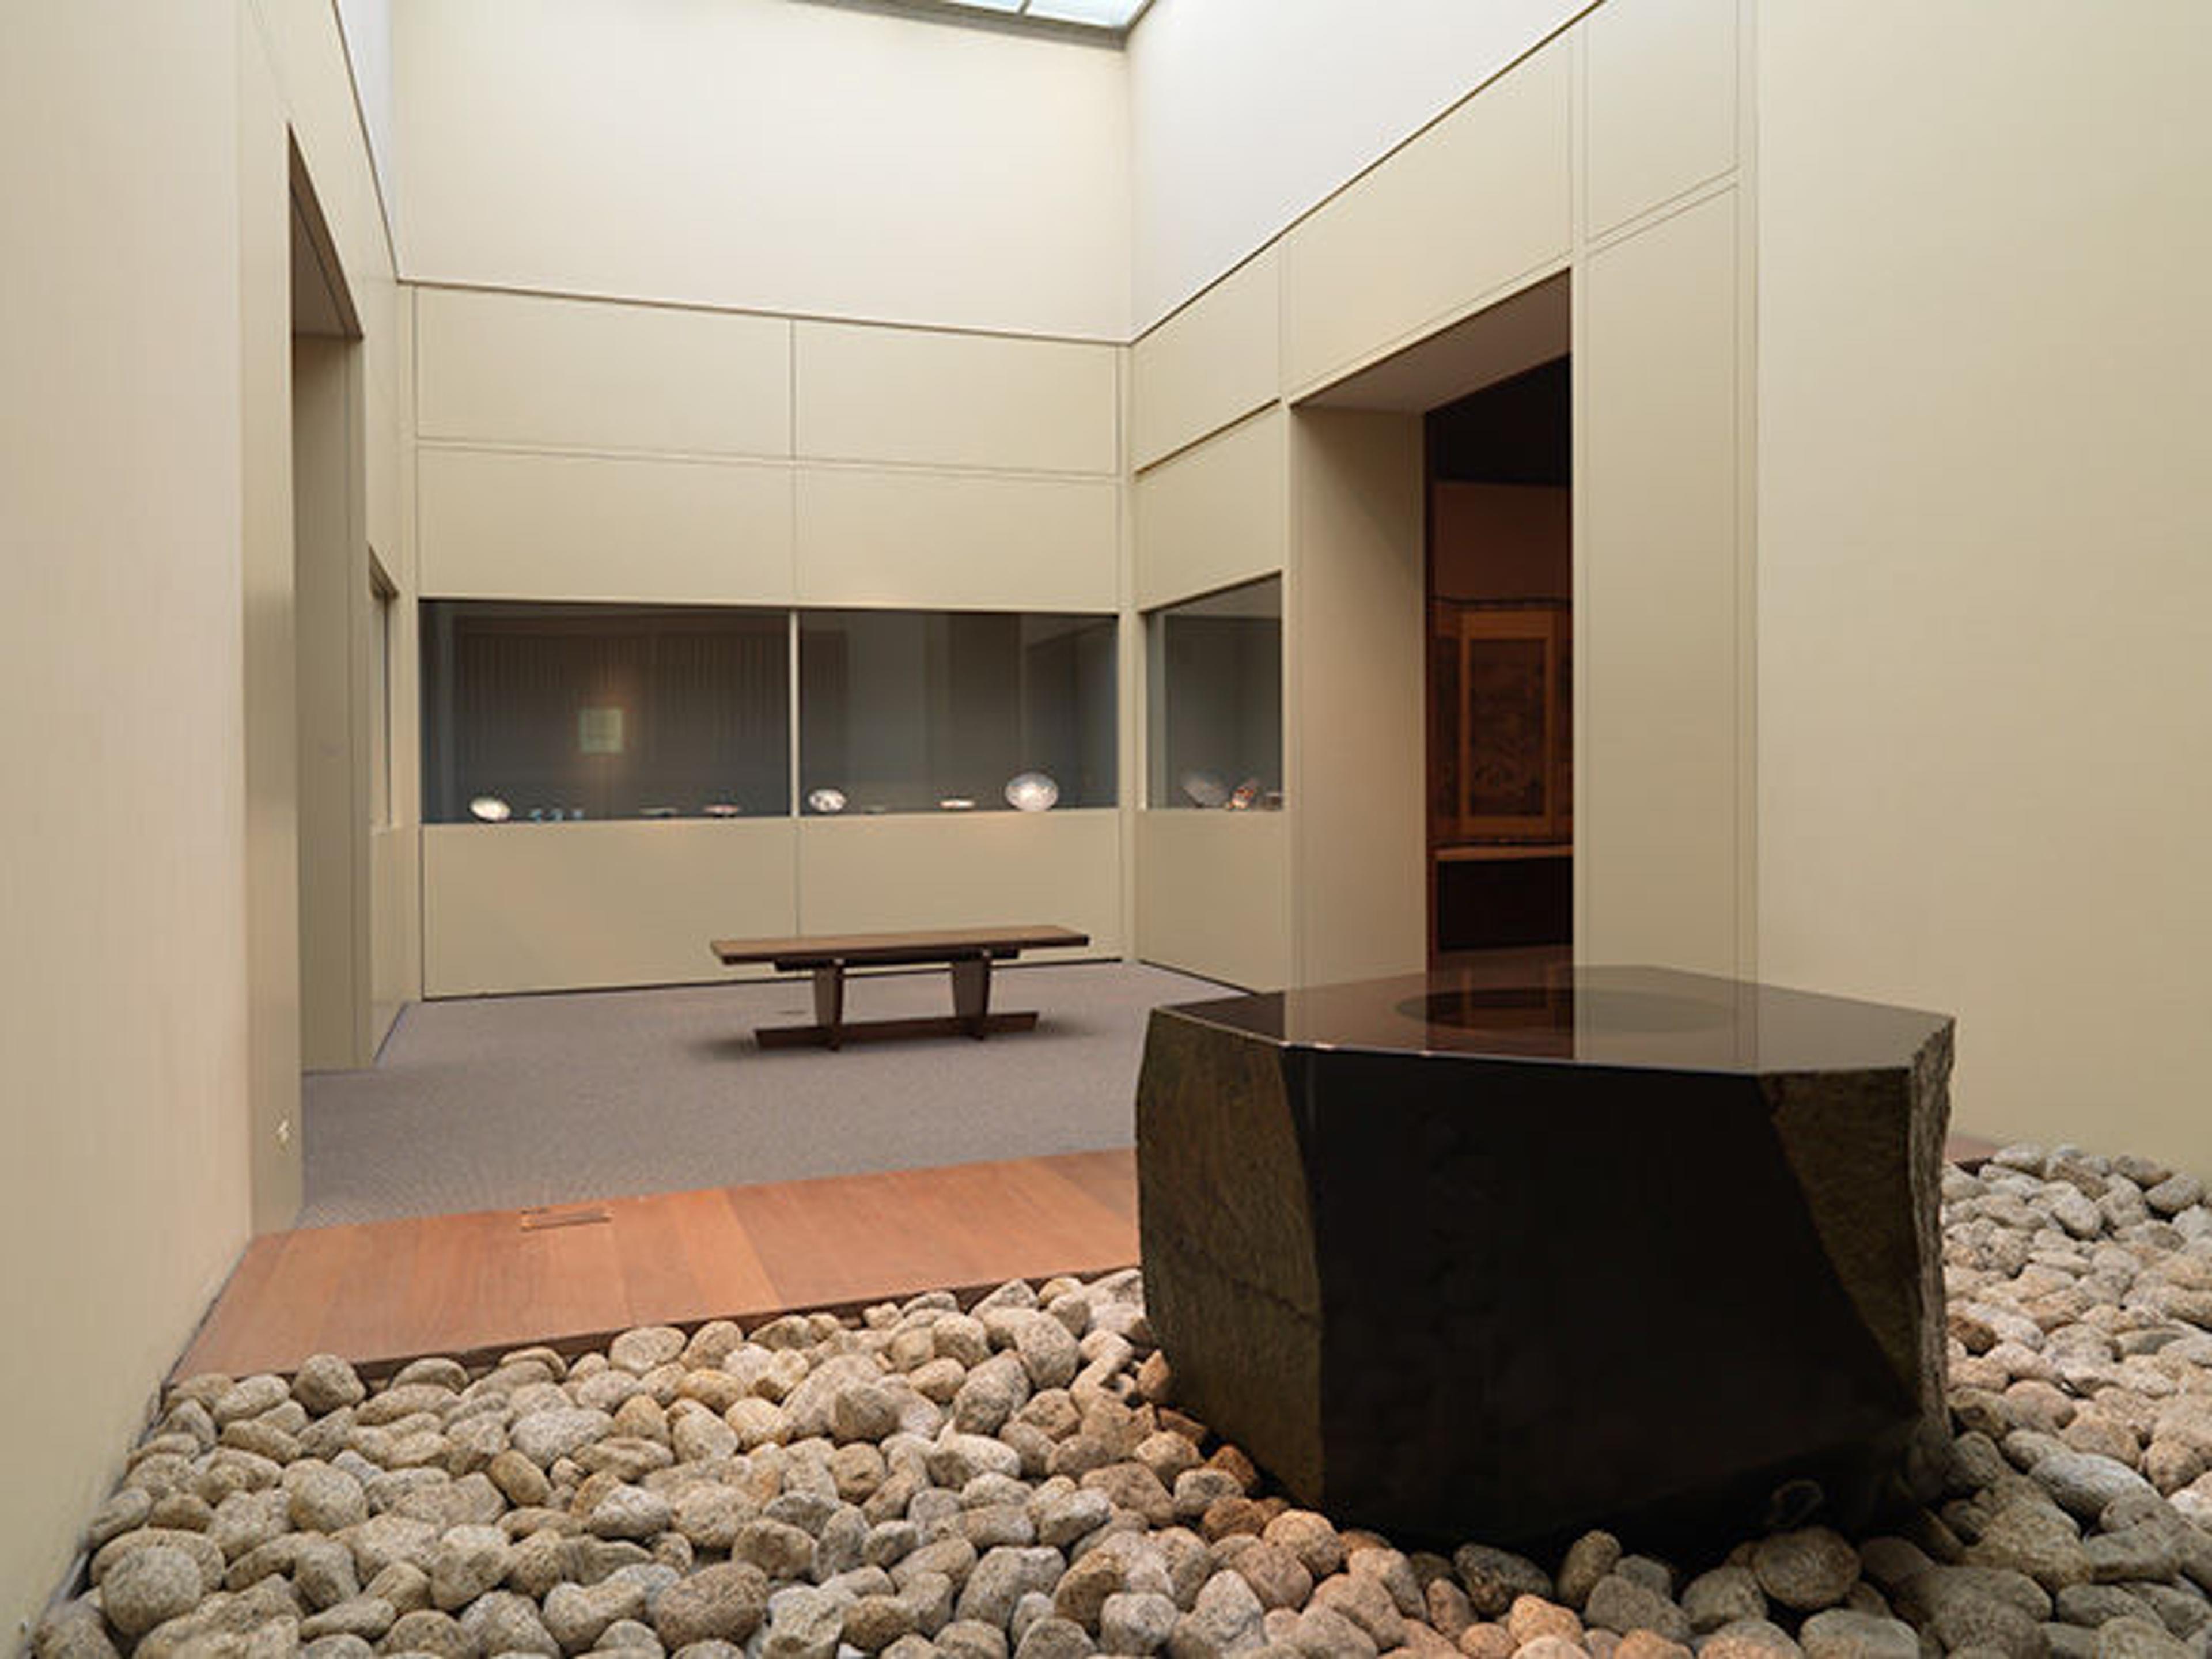 Isuma Noguchi's Water Stone